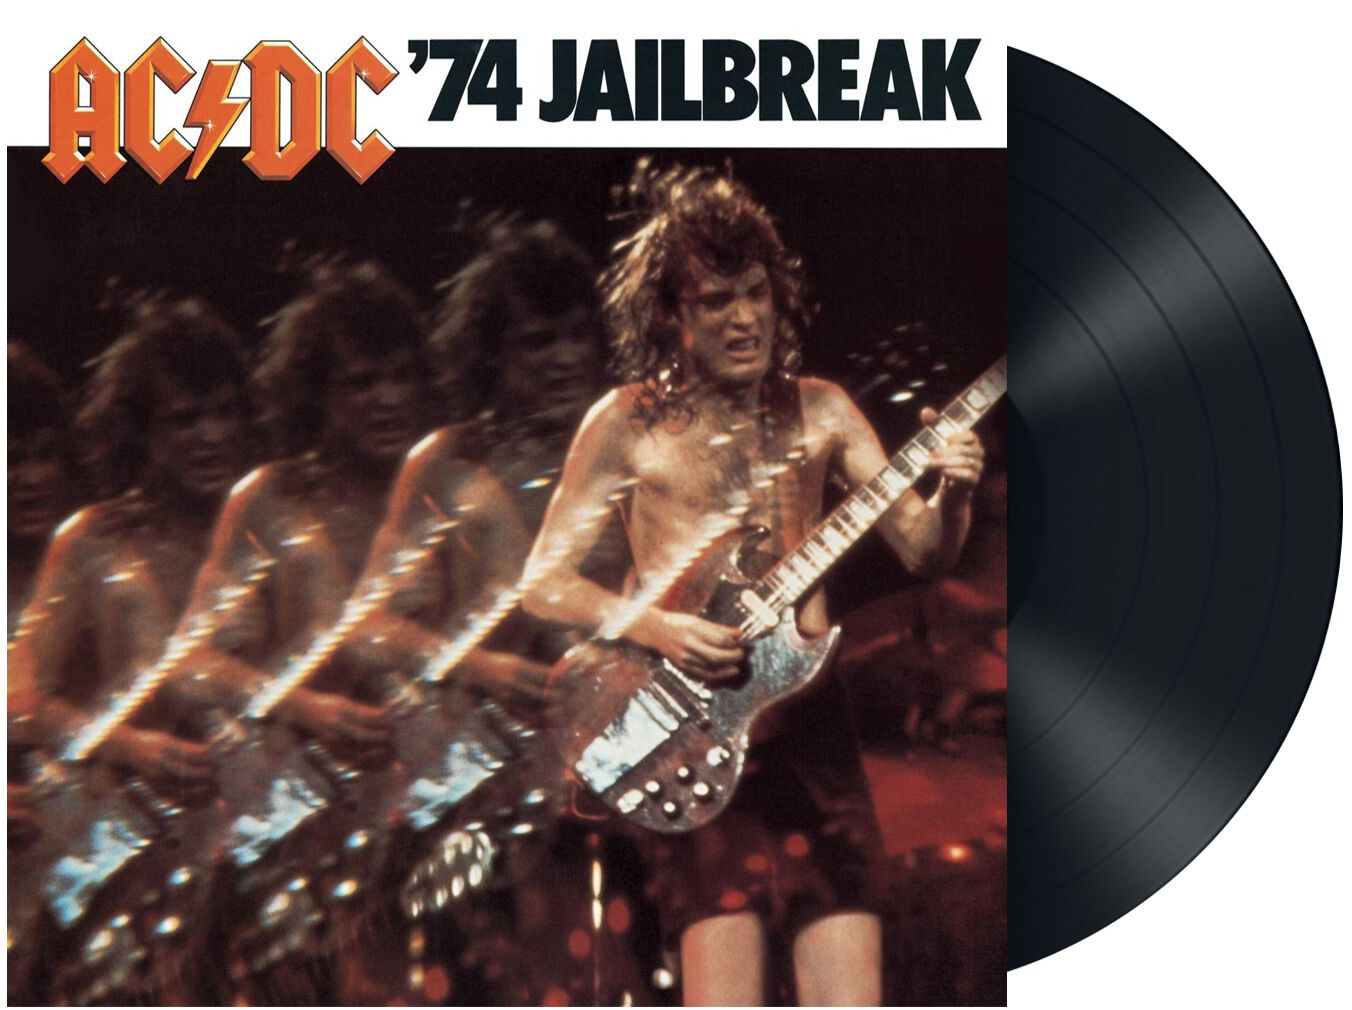 AC/DC 74 Jailbreak women's Tee 